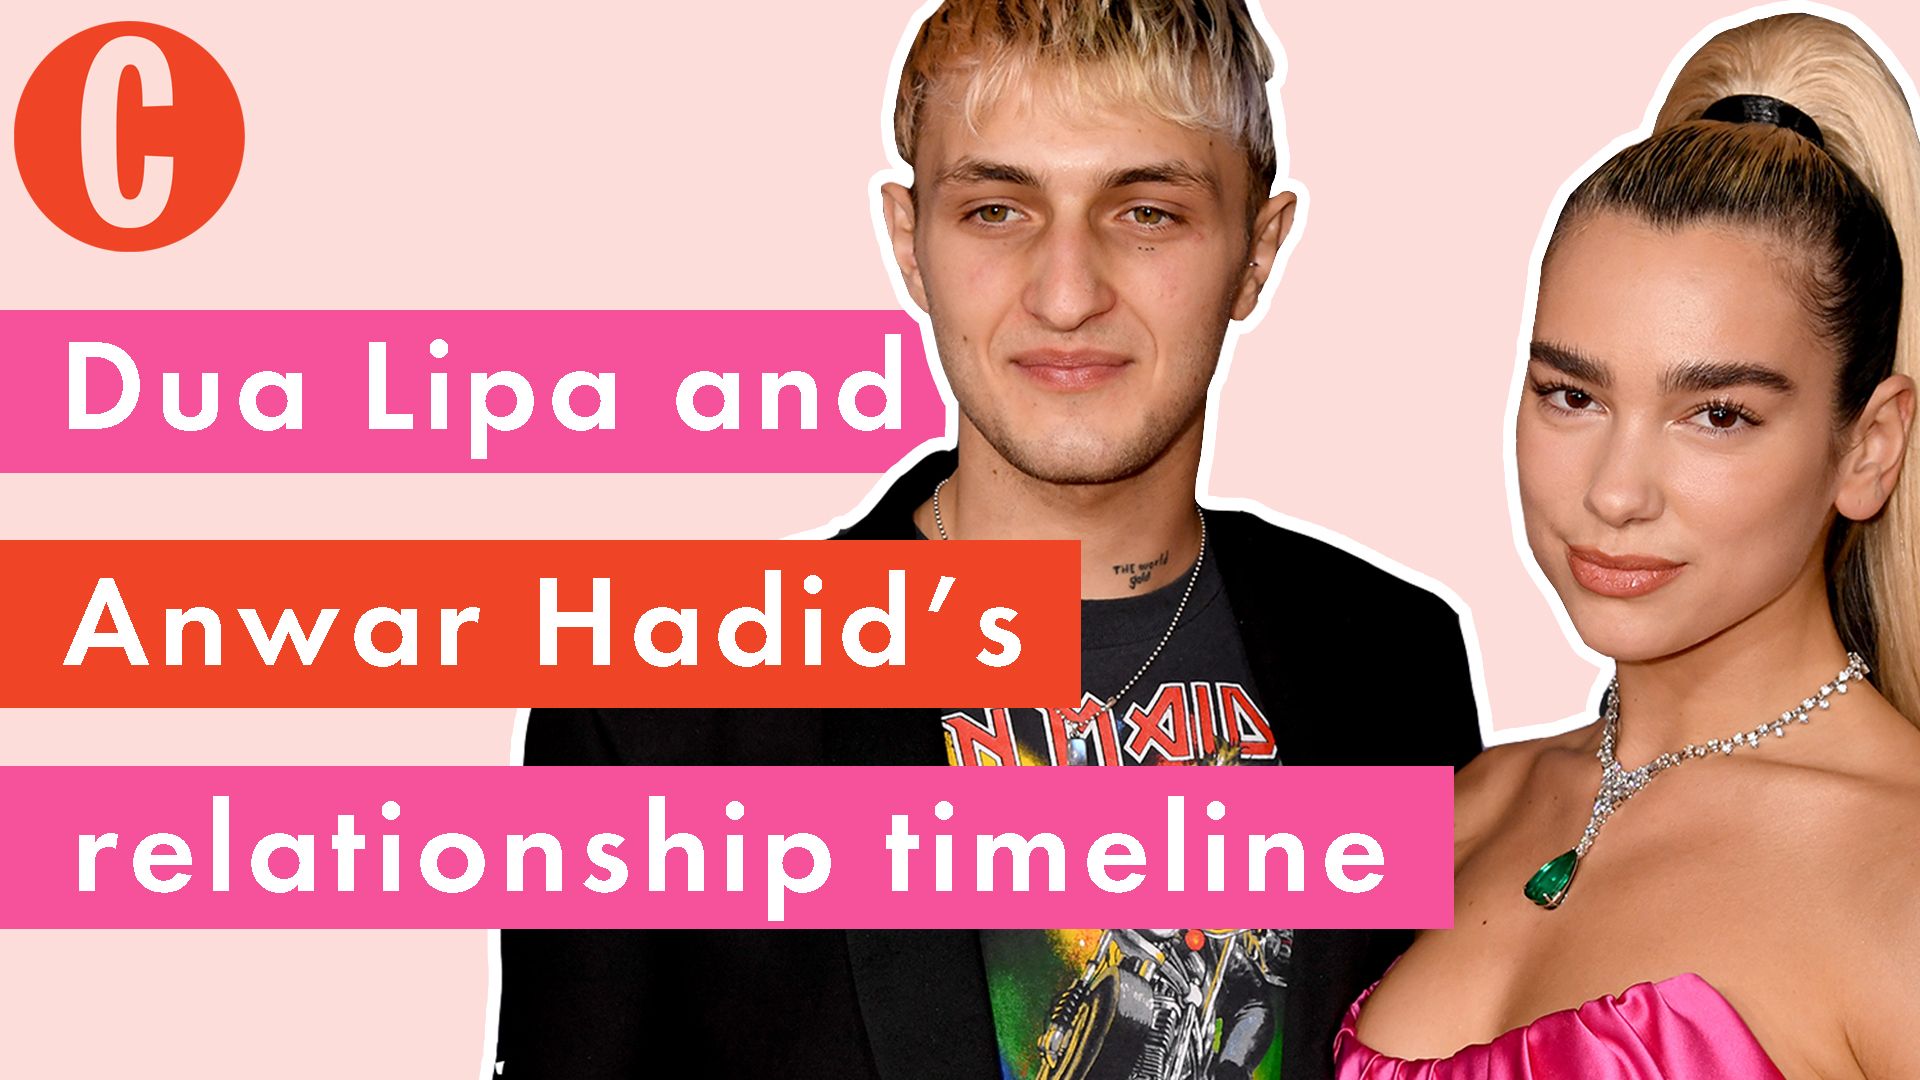 Fans claim Jack Harlow 'manifested' relationship with Dua Lipa